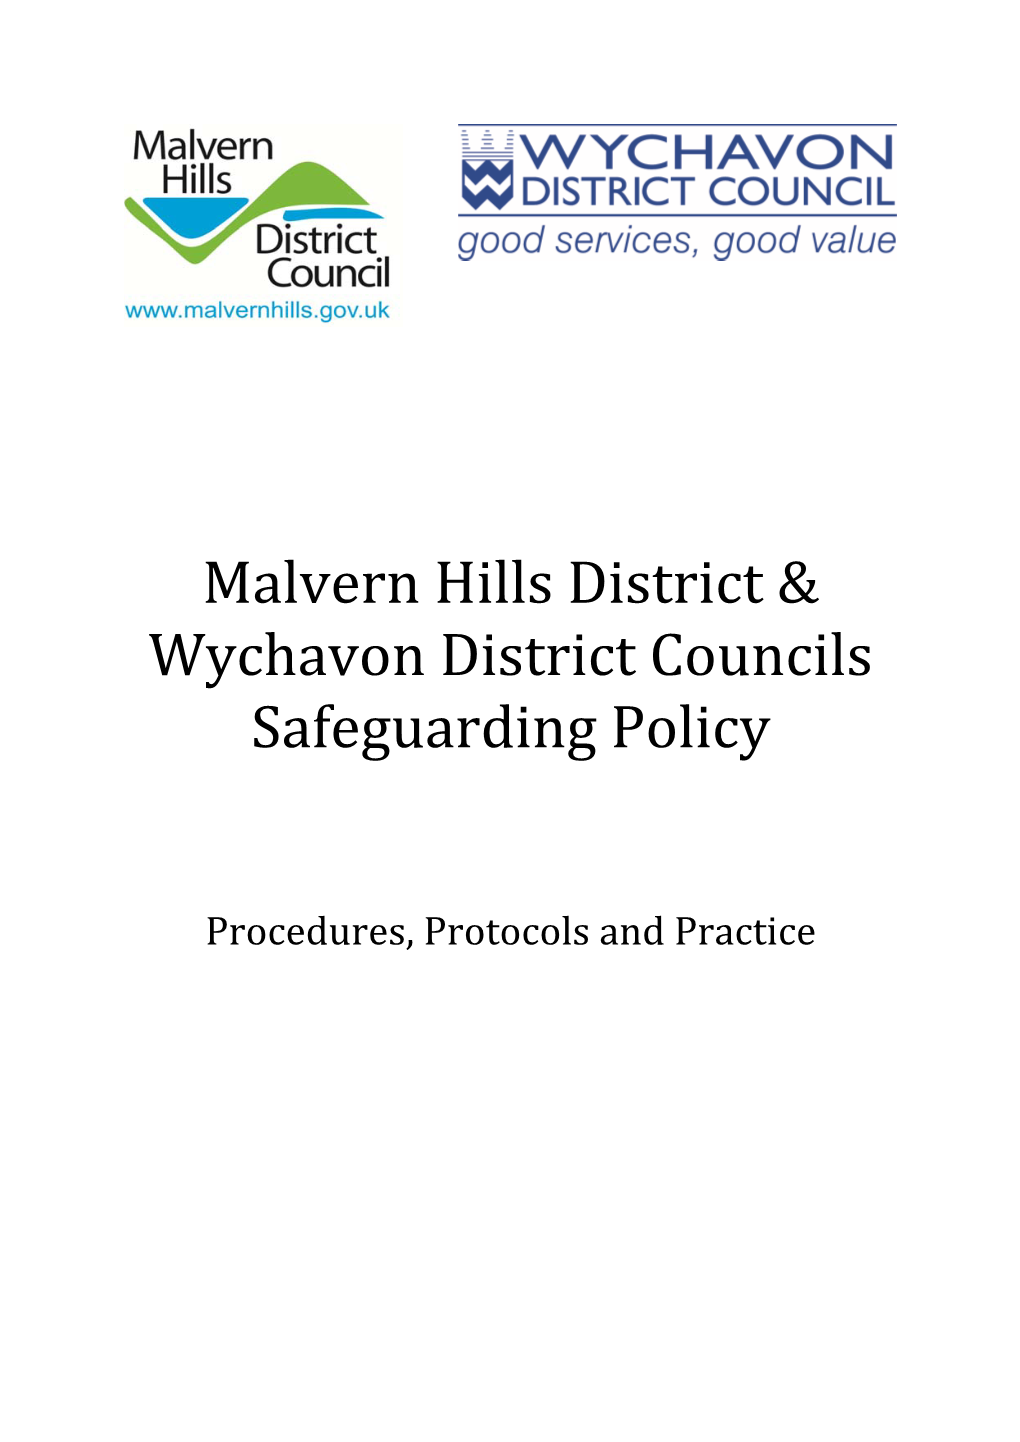 Malvern Hills District & Wychavon District Councils Safeguarding Policy